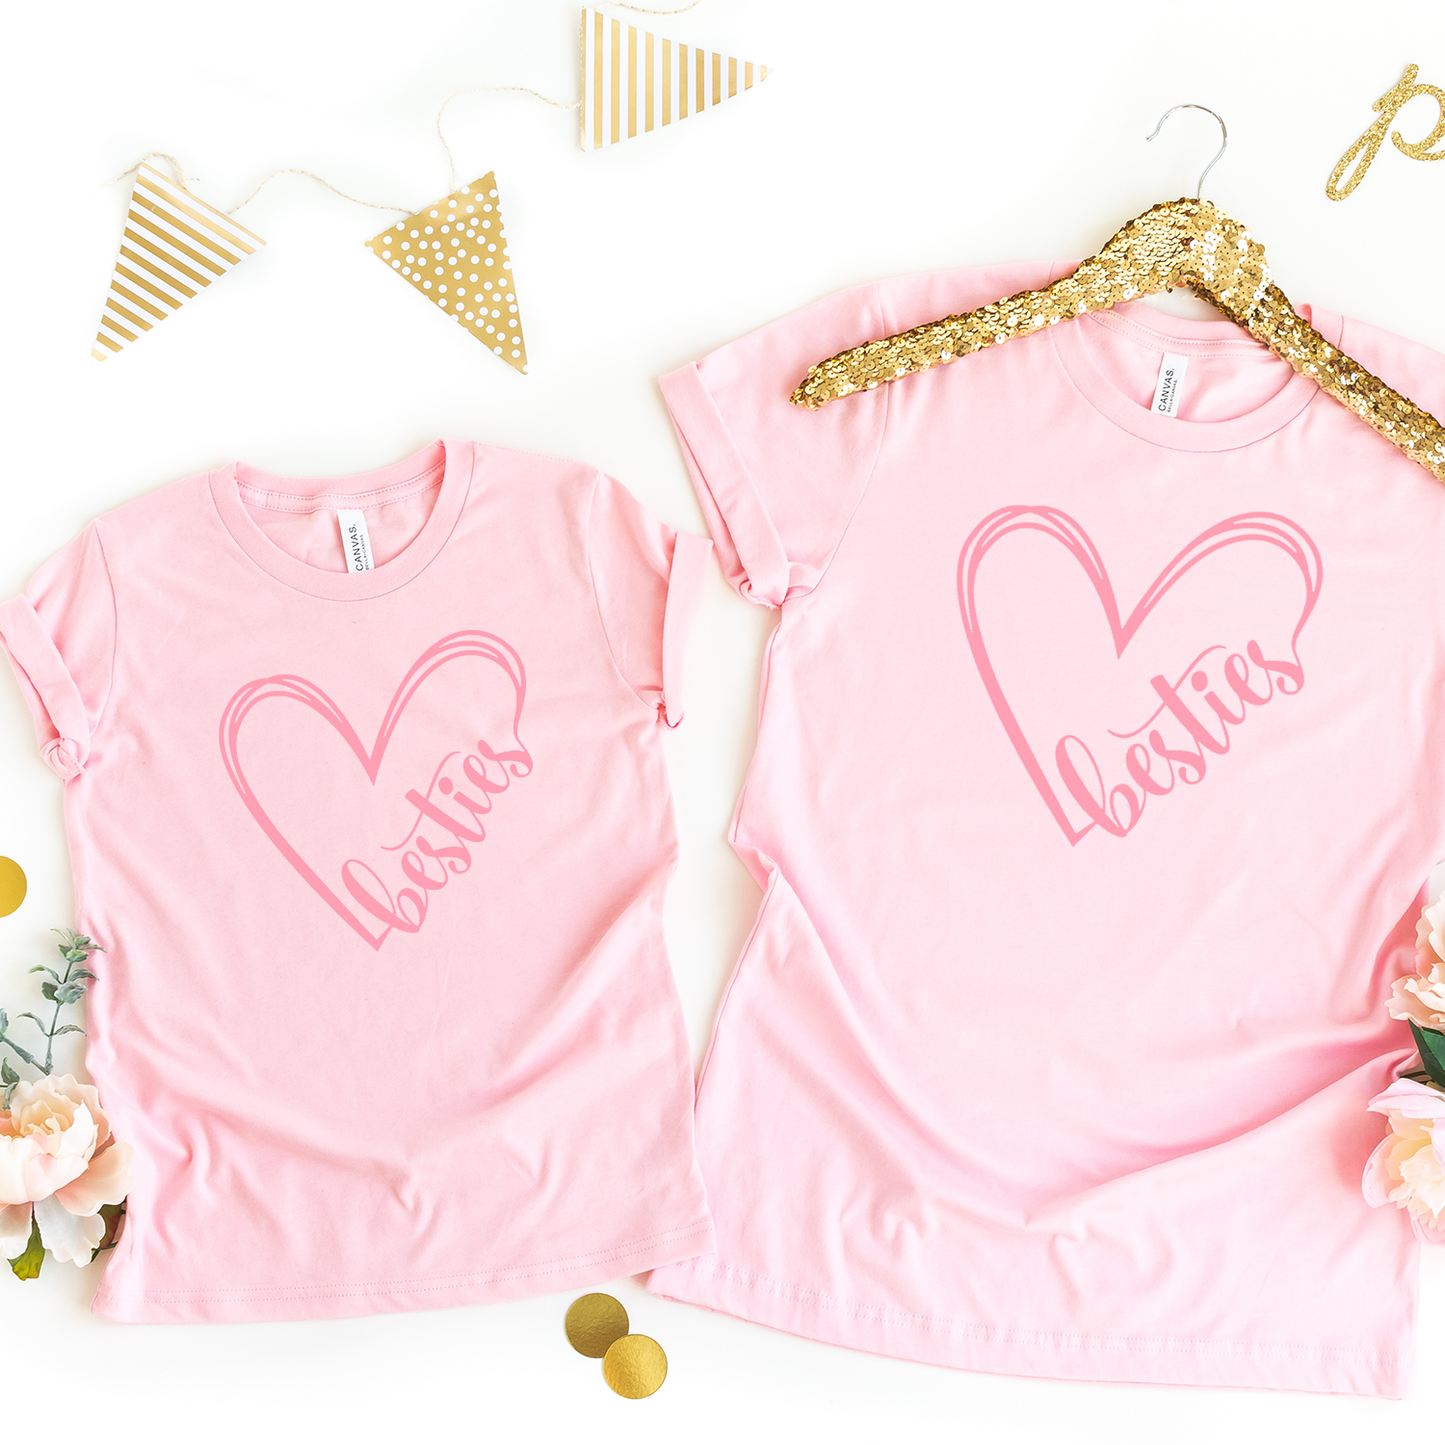 Besties Heart Pink Twinning T-Shirts - mummy & me